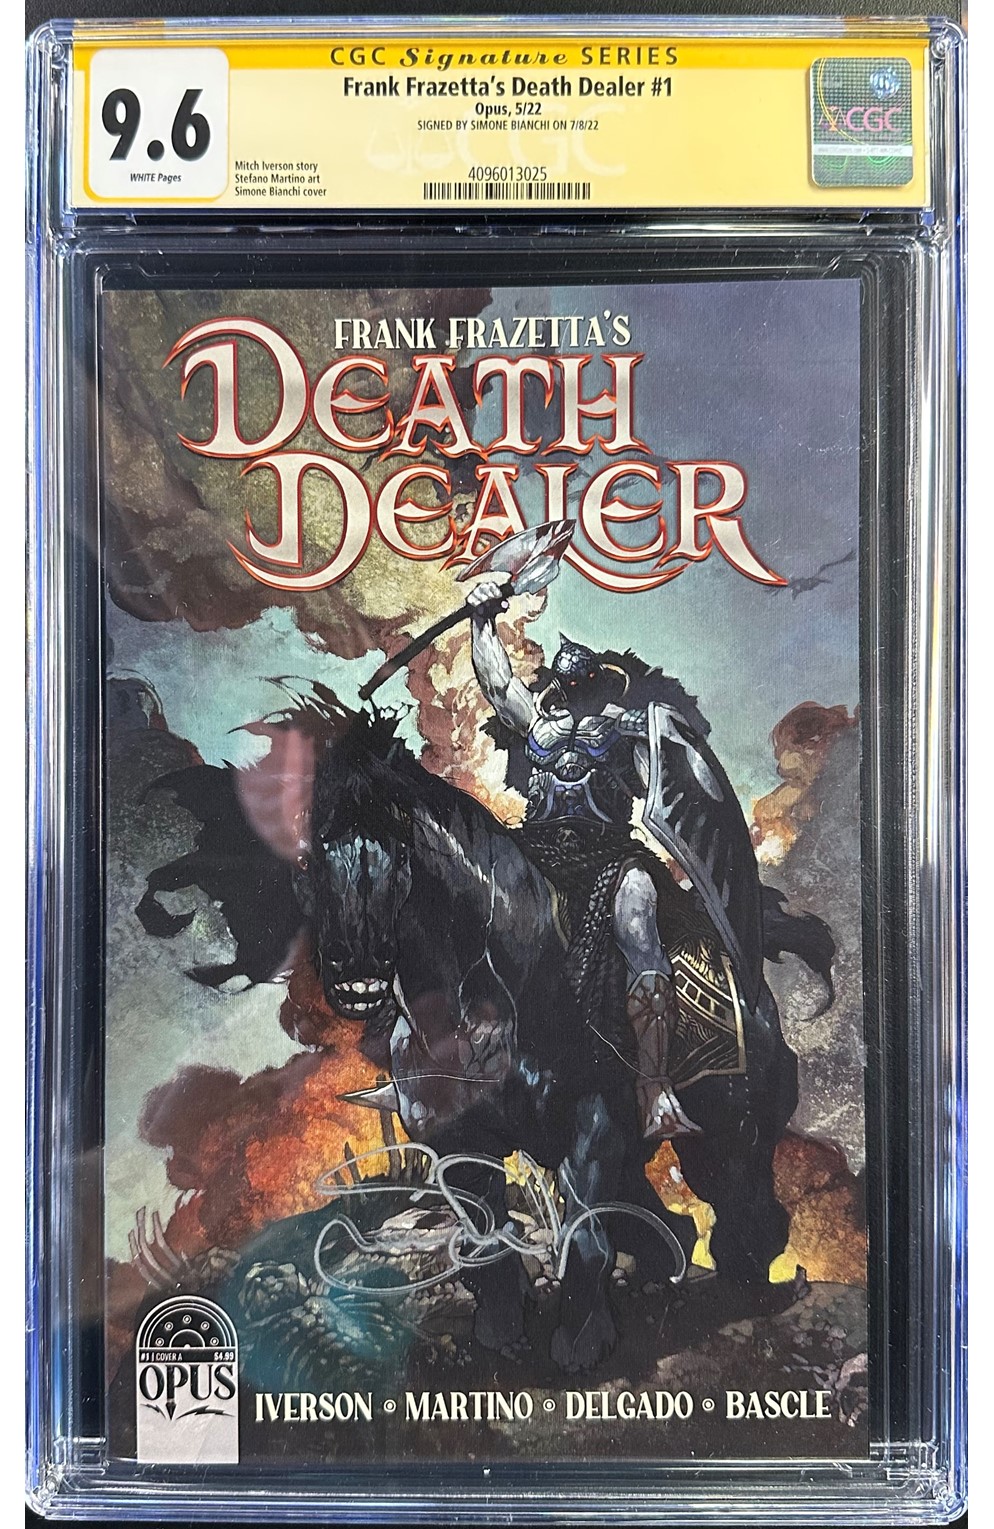 Frank Frazetta's Death Dealer #1 Cgc Signature Series 9.6